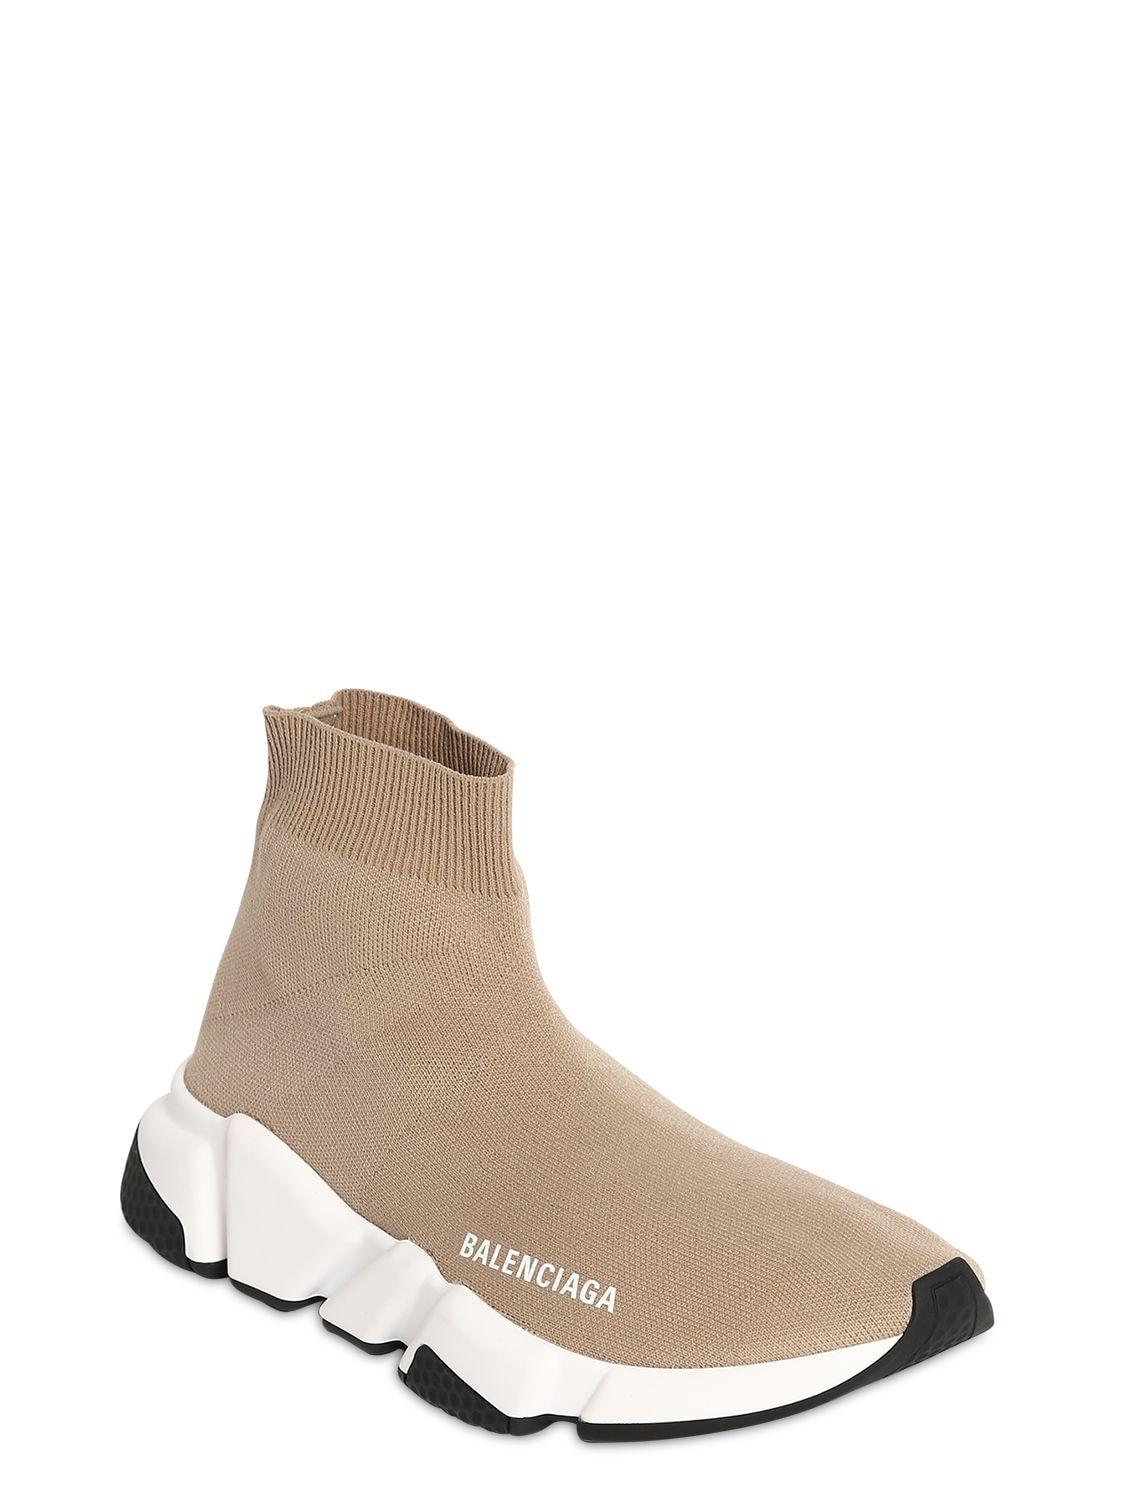 Balenciaga Speed Sneaker in Beige (Natural) - Lyst